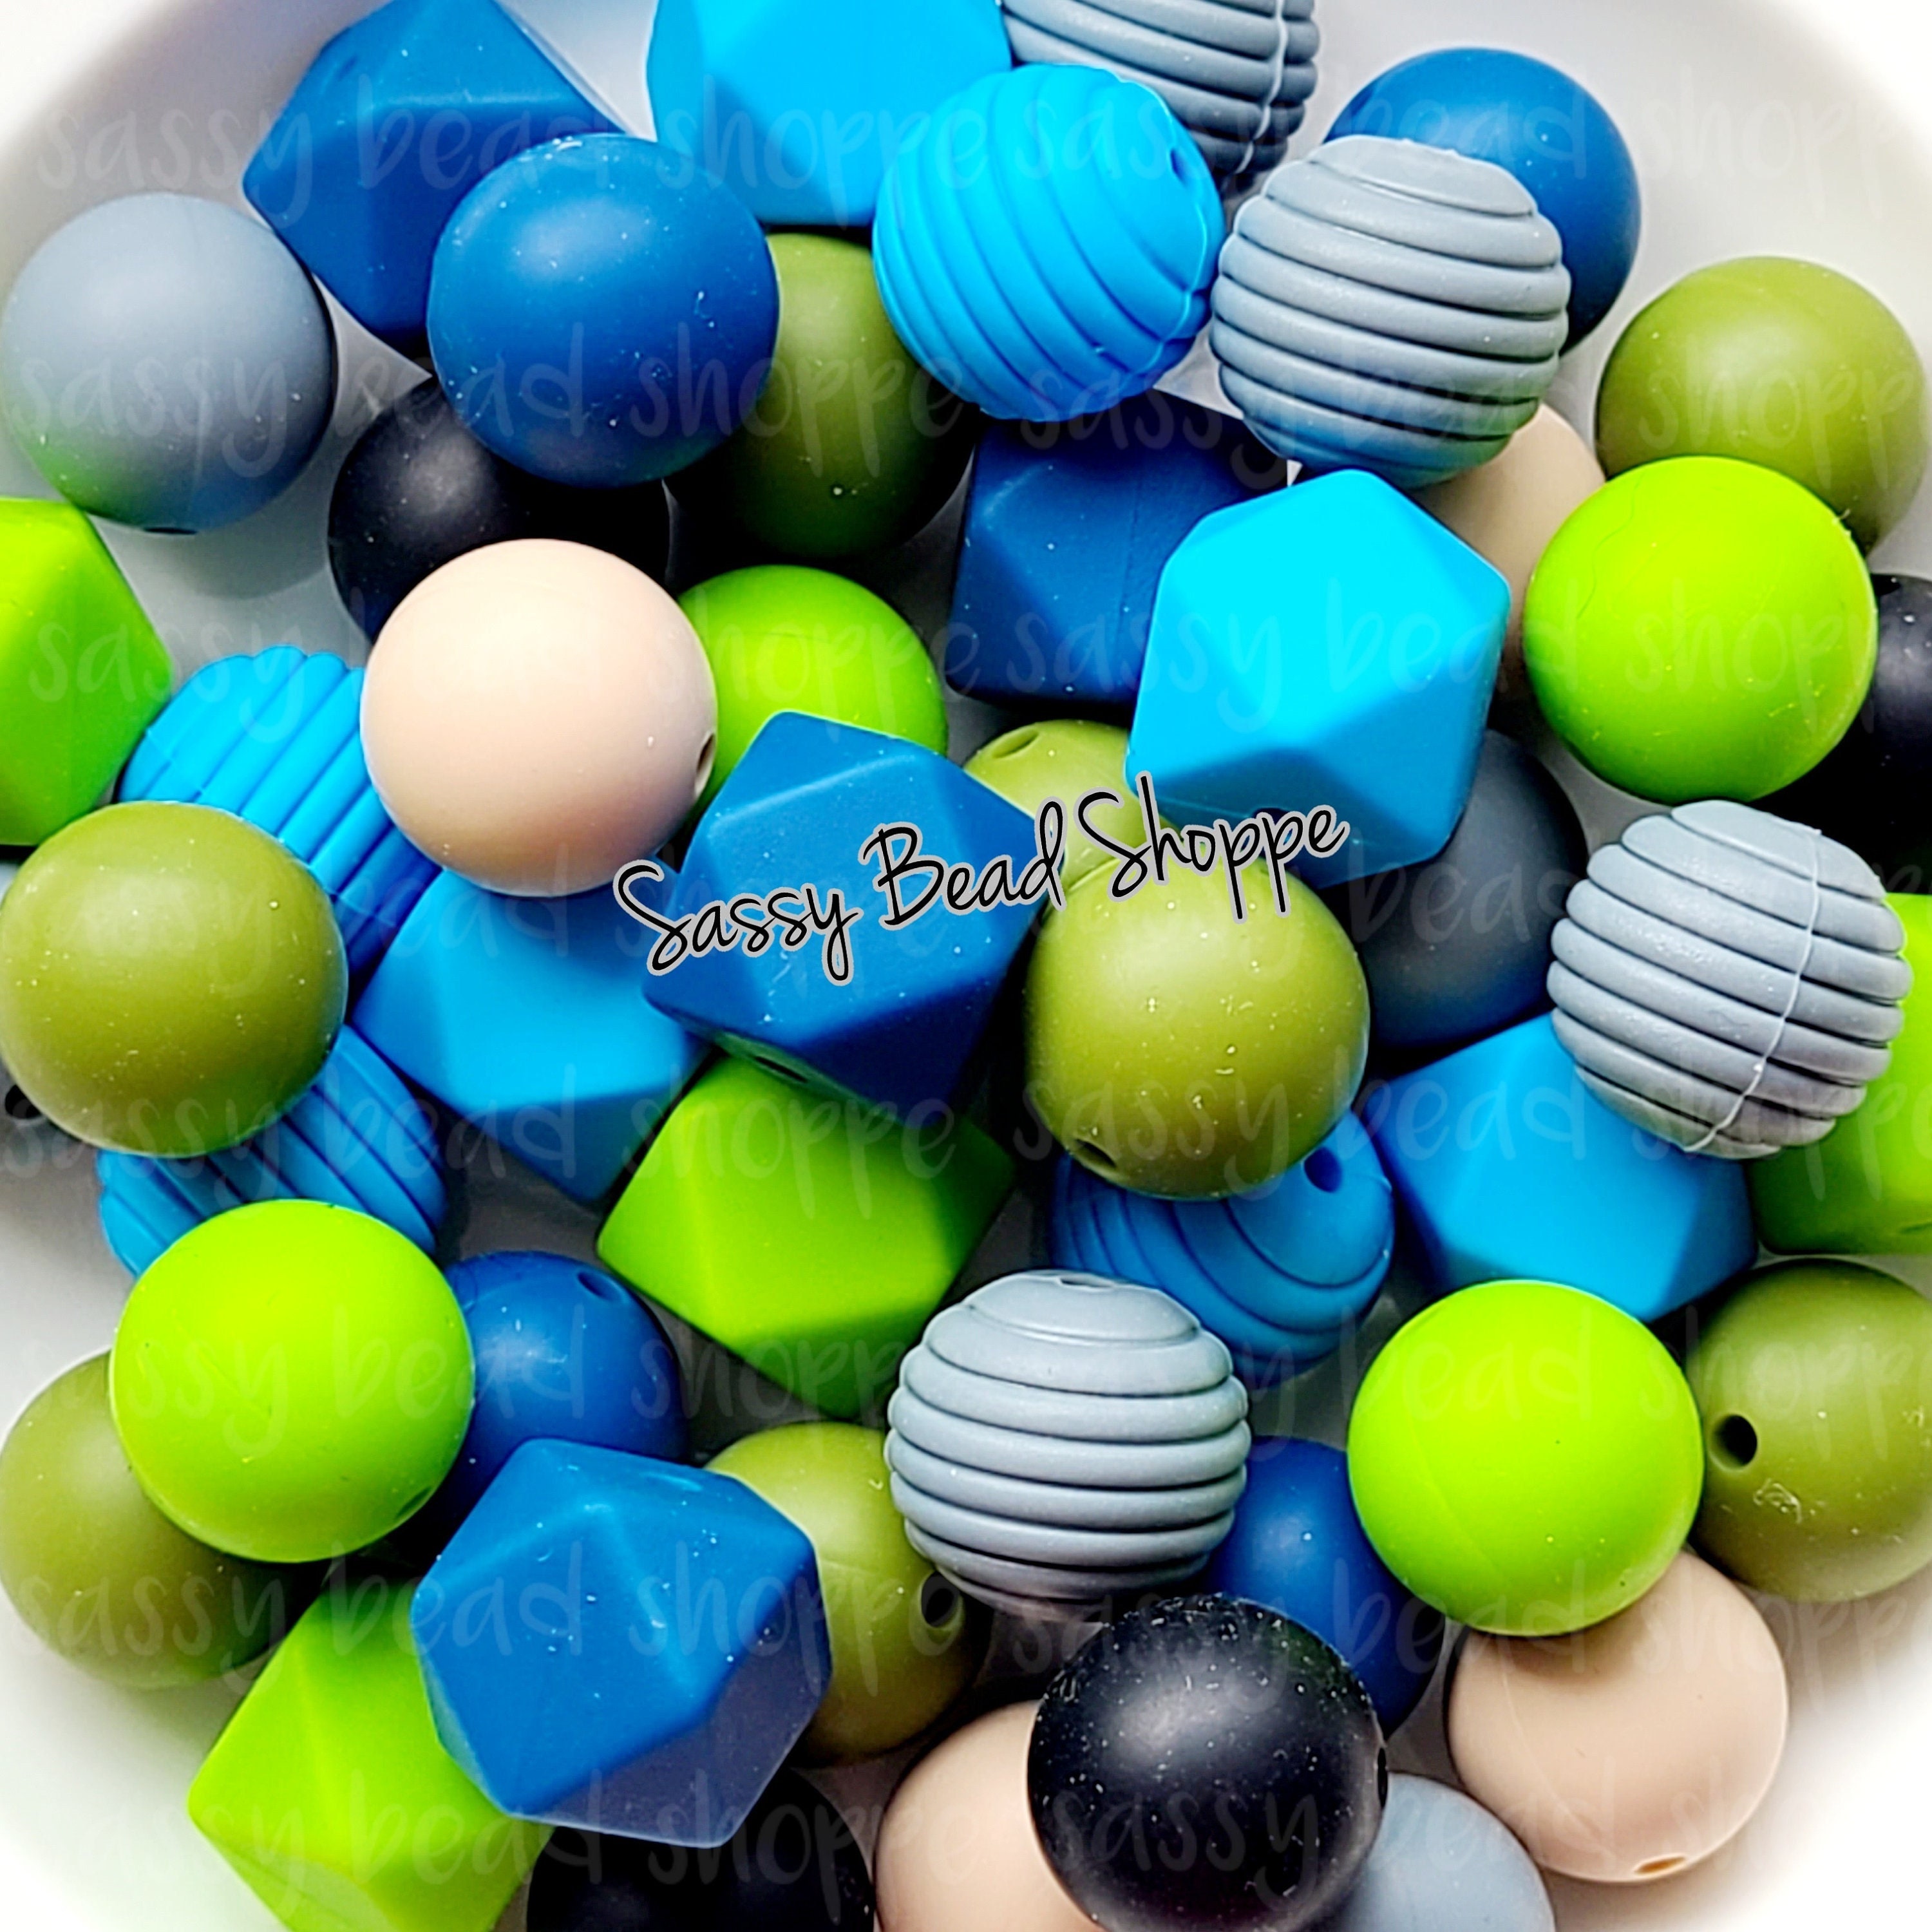 Silicone Bead Bundles & Kits – Busy Bead